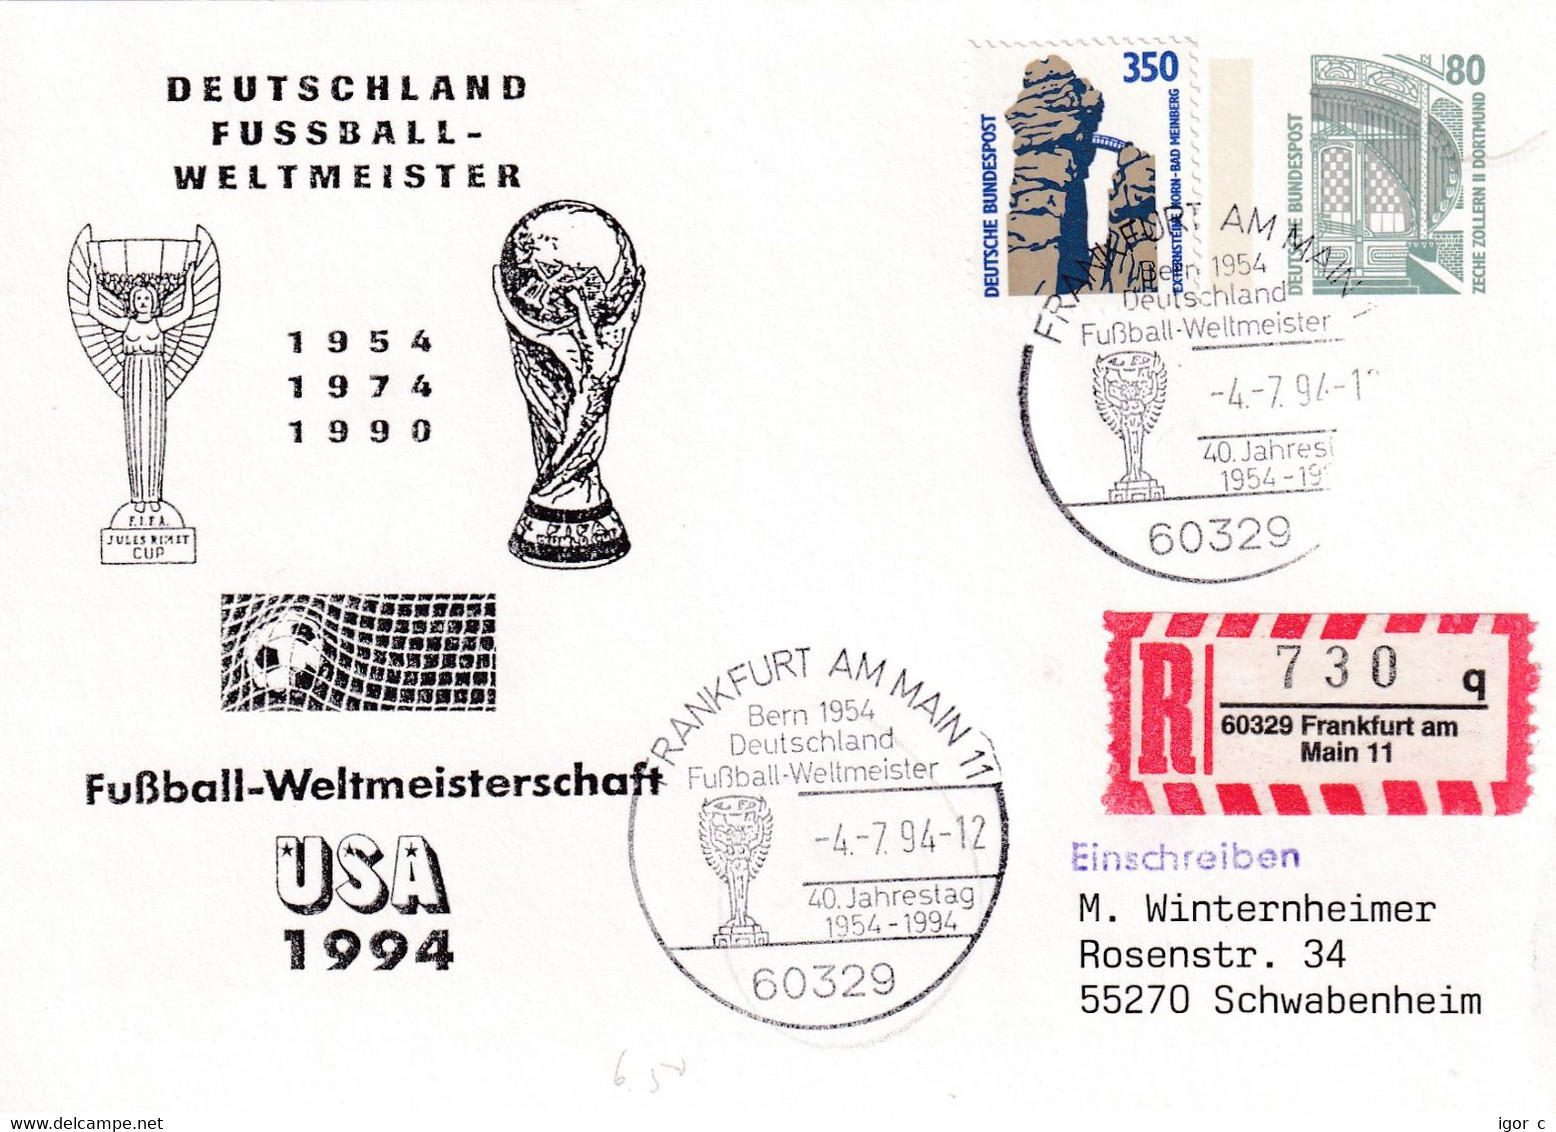 USA 1994 Registered Postal Stationery Card: Football Soccer Calcio Fussball; FIFA World Cup USA; Wunder Von Bern - 1954 – Suiza